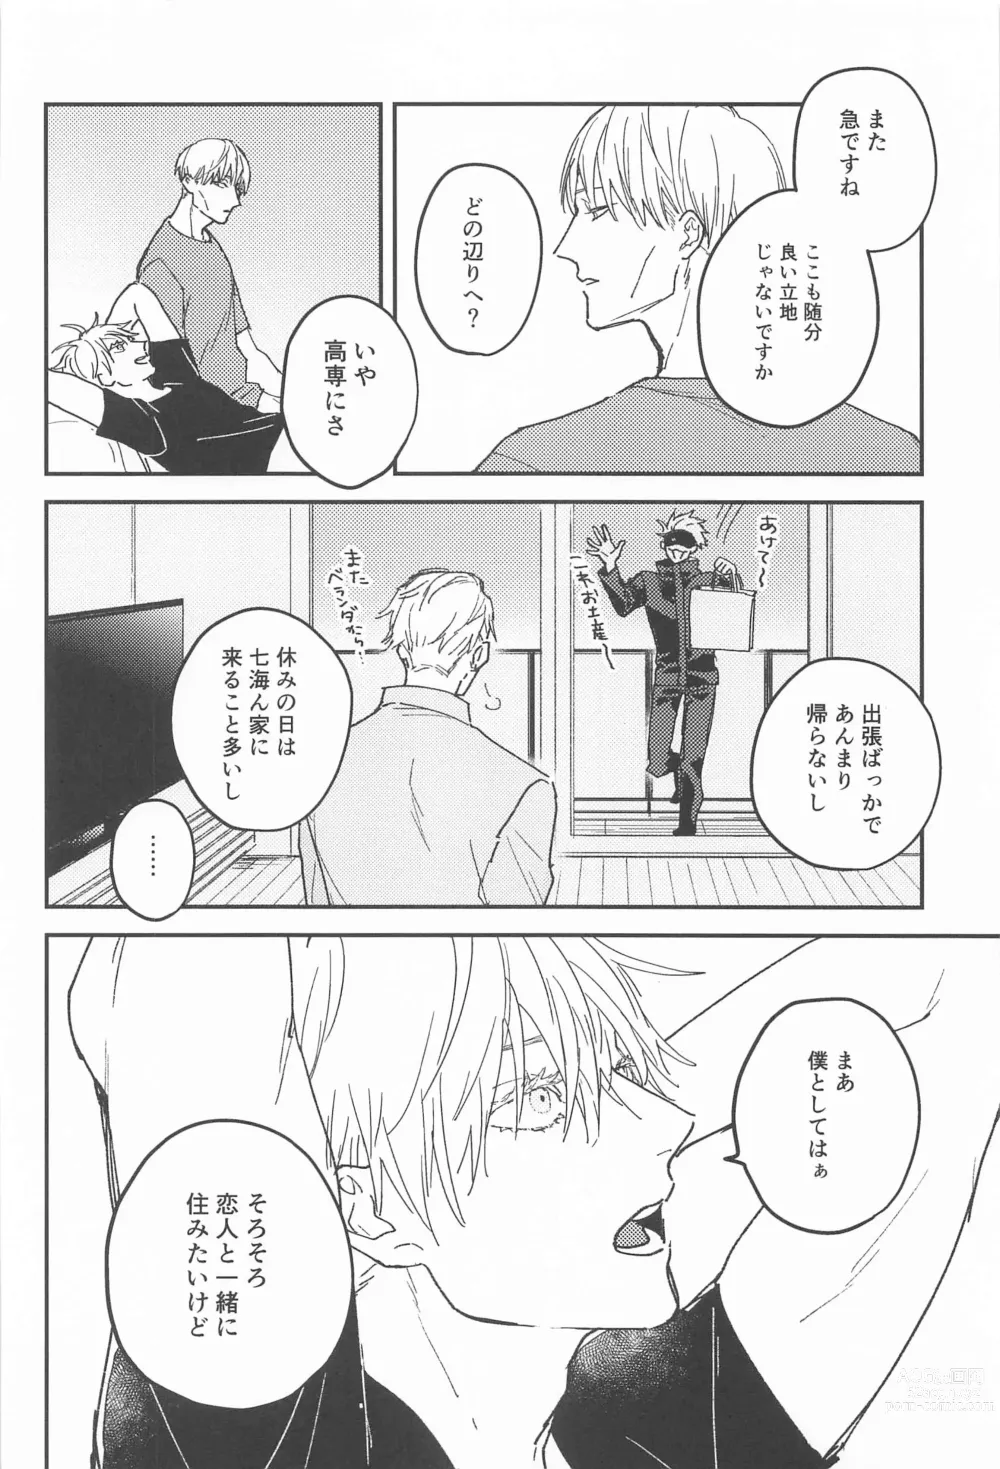 Page 3 of doujinshi 10years